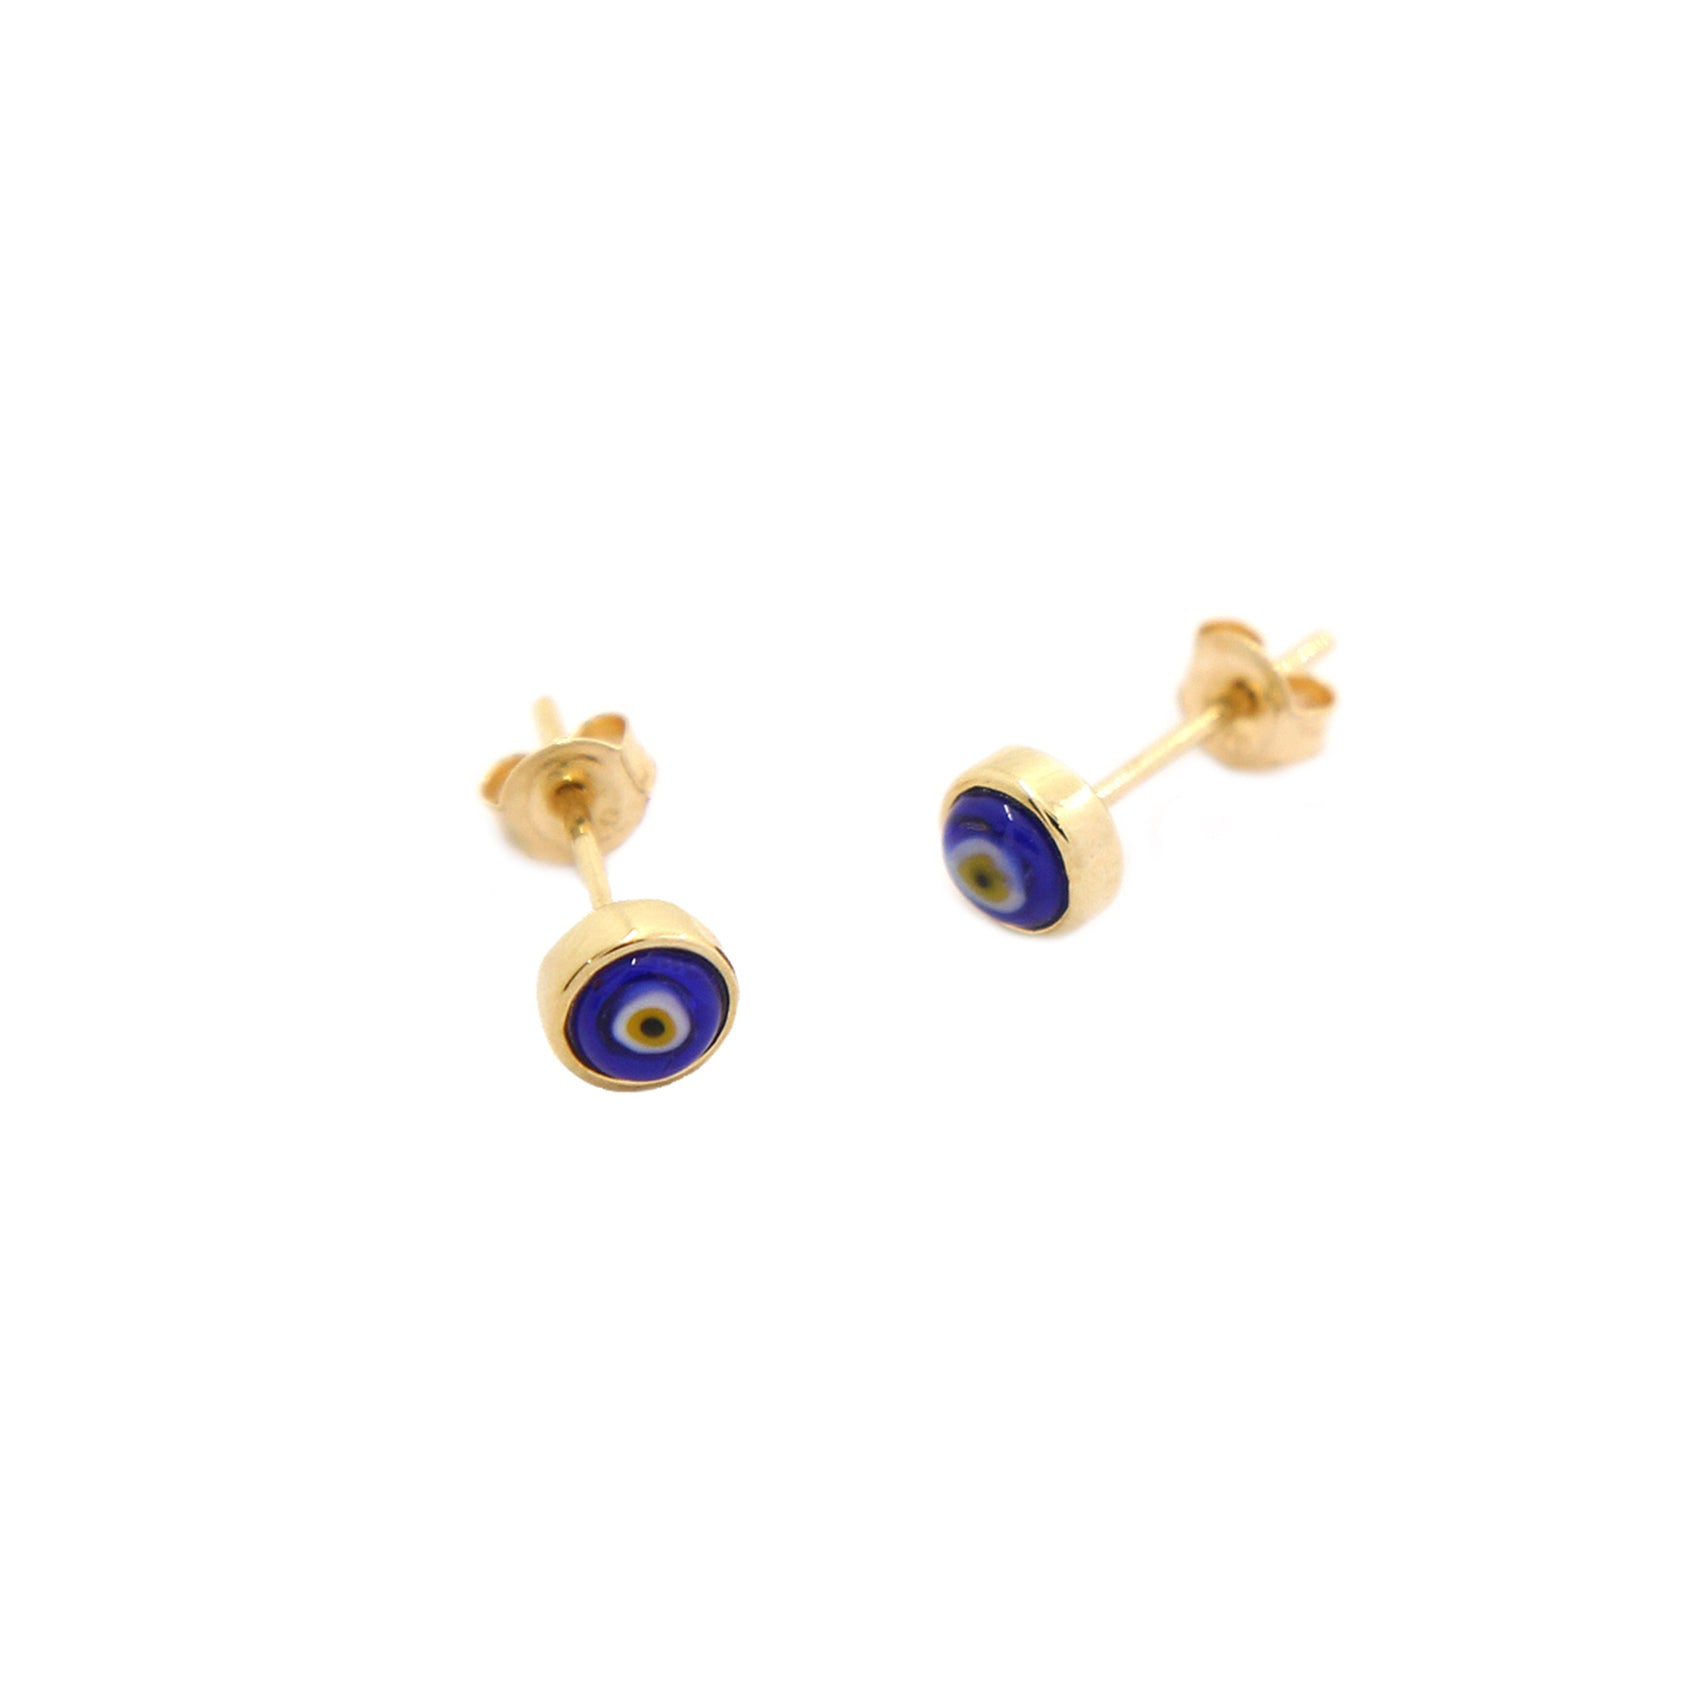 Shop Exquisite Gold Evil Eye Earrings